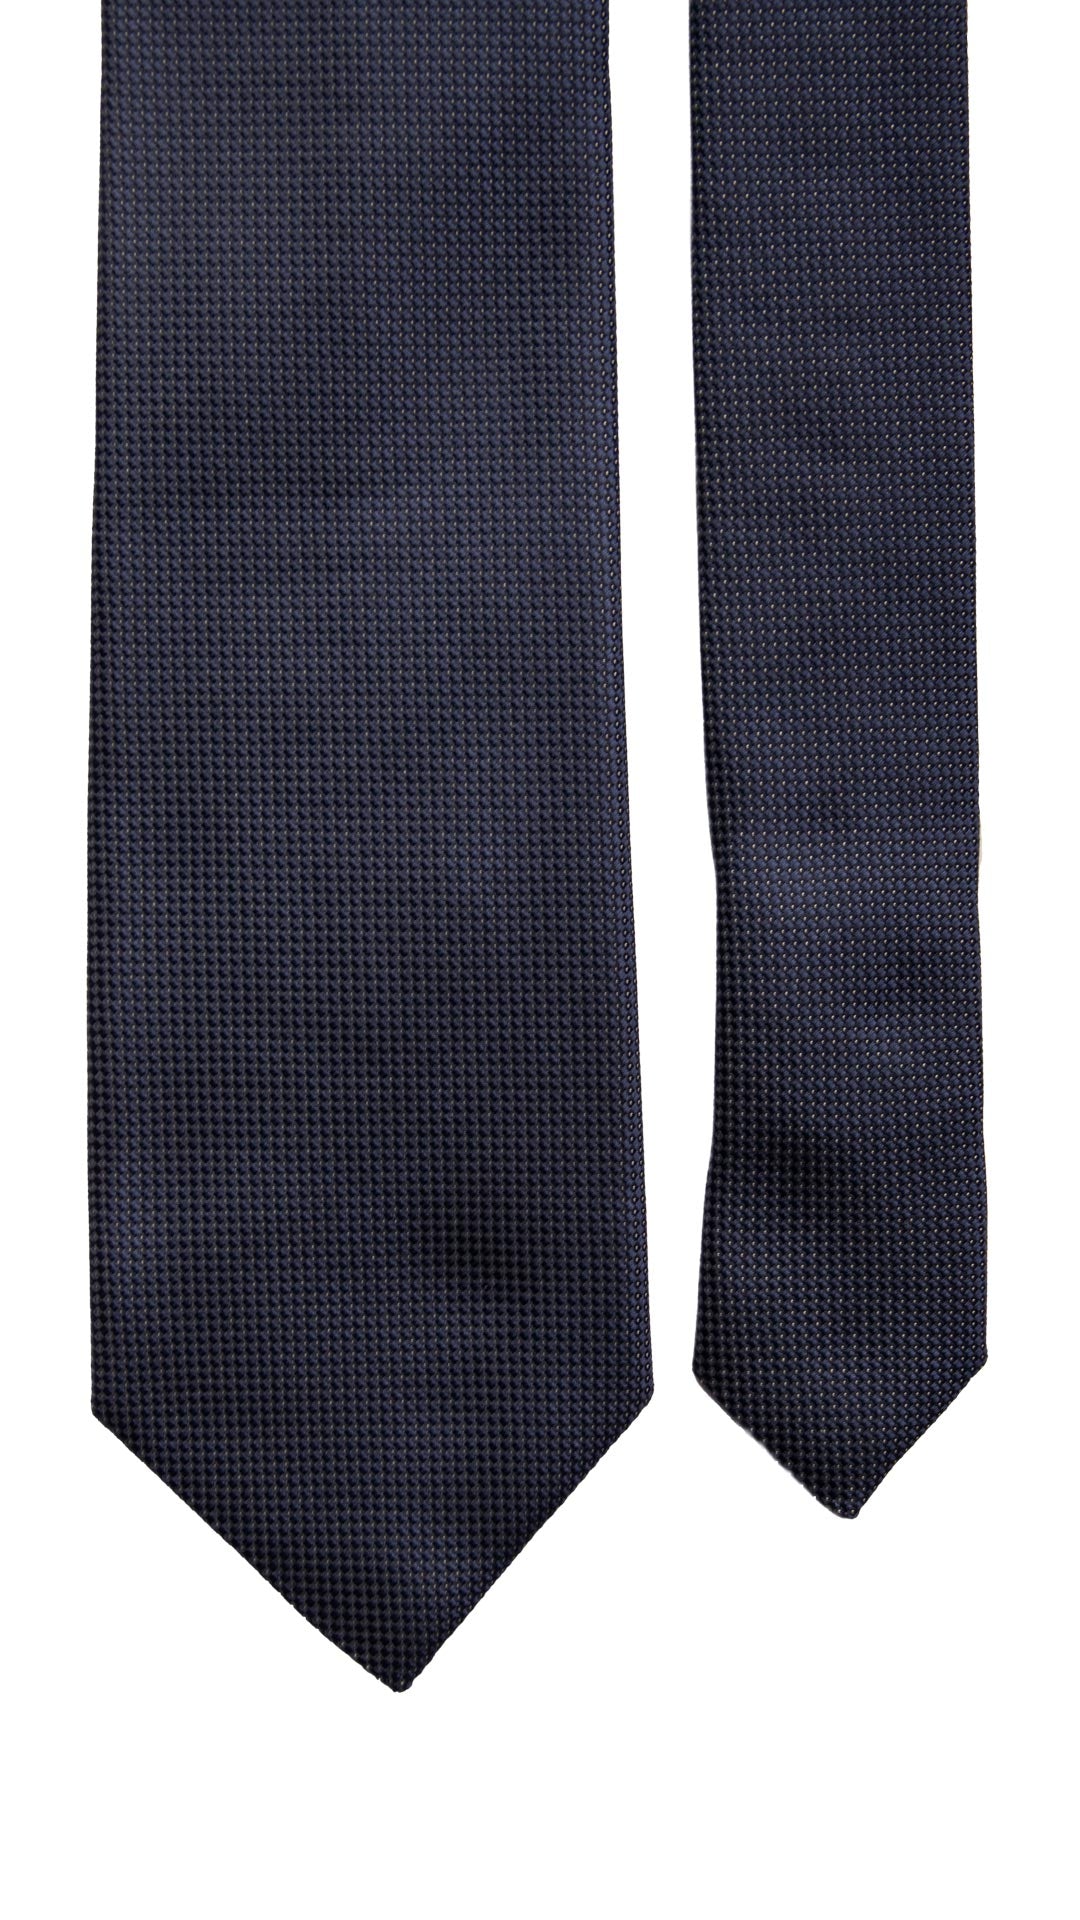 Cravatta da Cerimonia di Seta Blu Navy Grigia CY6612 Pala